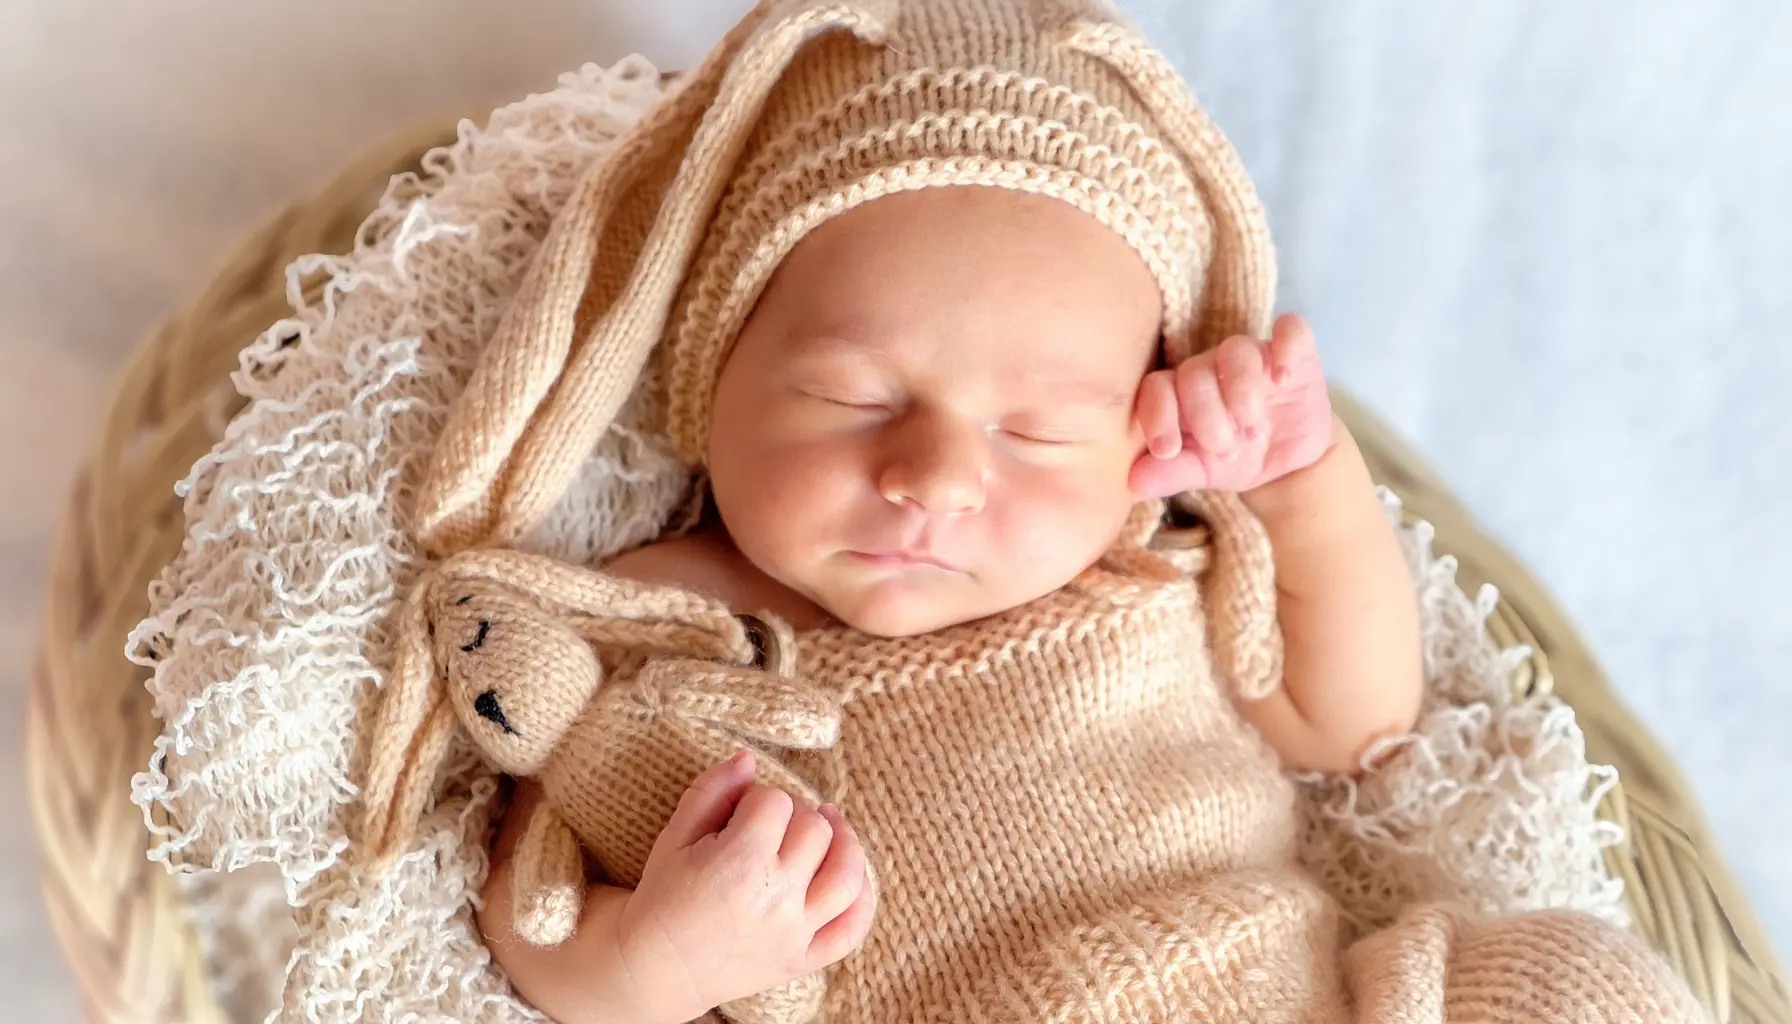 Newborn baby's delicate skin